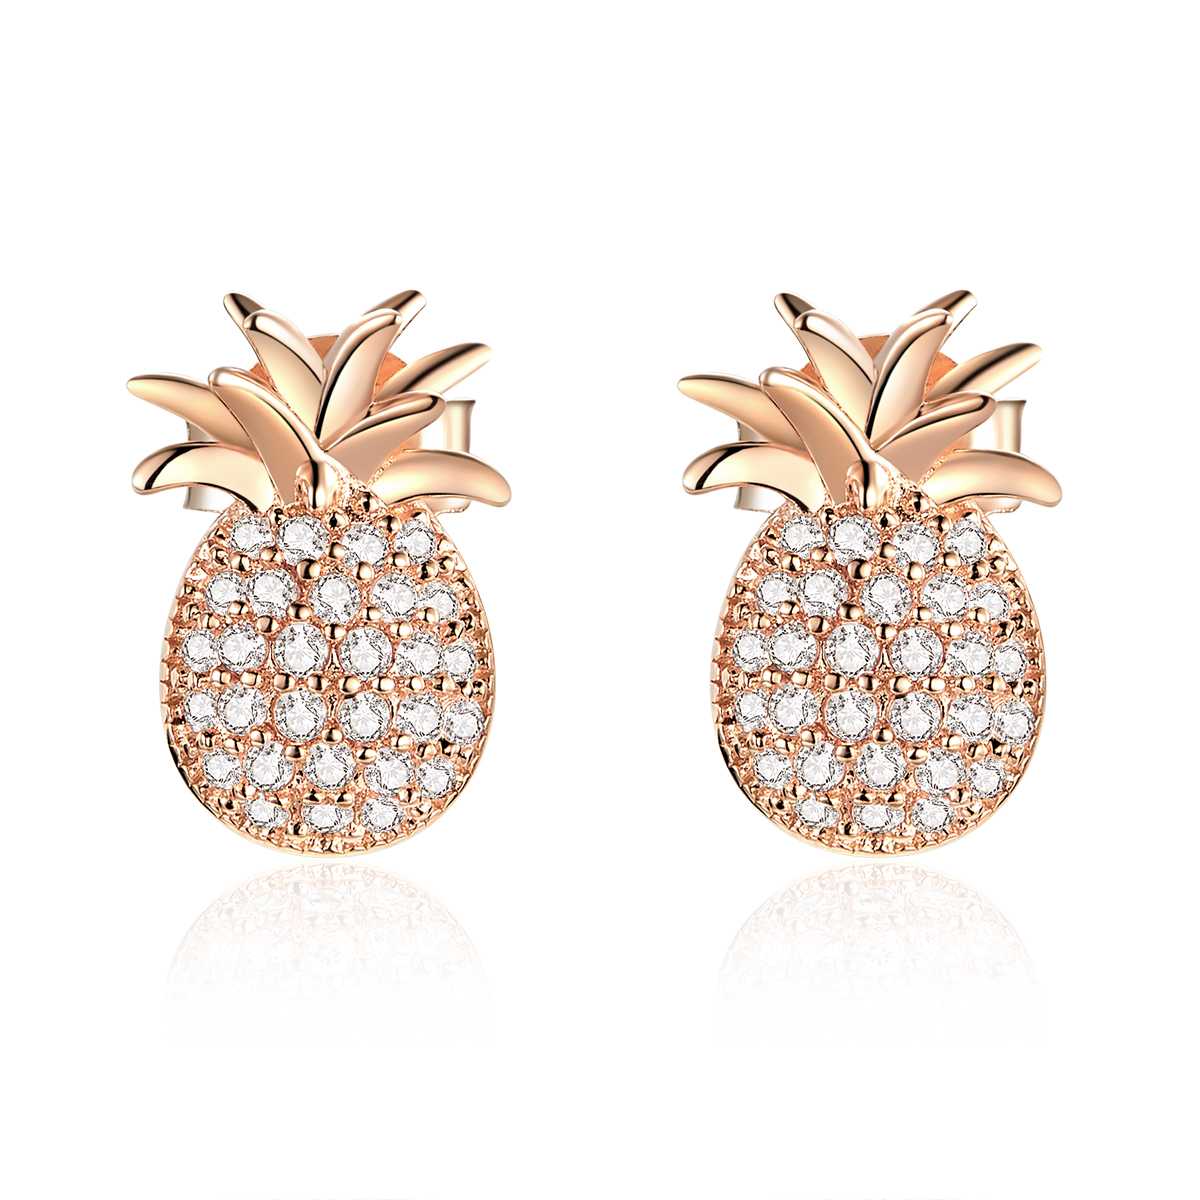 pandora style pineapple stud earrings sce803